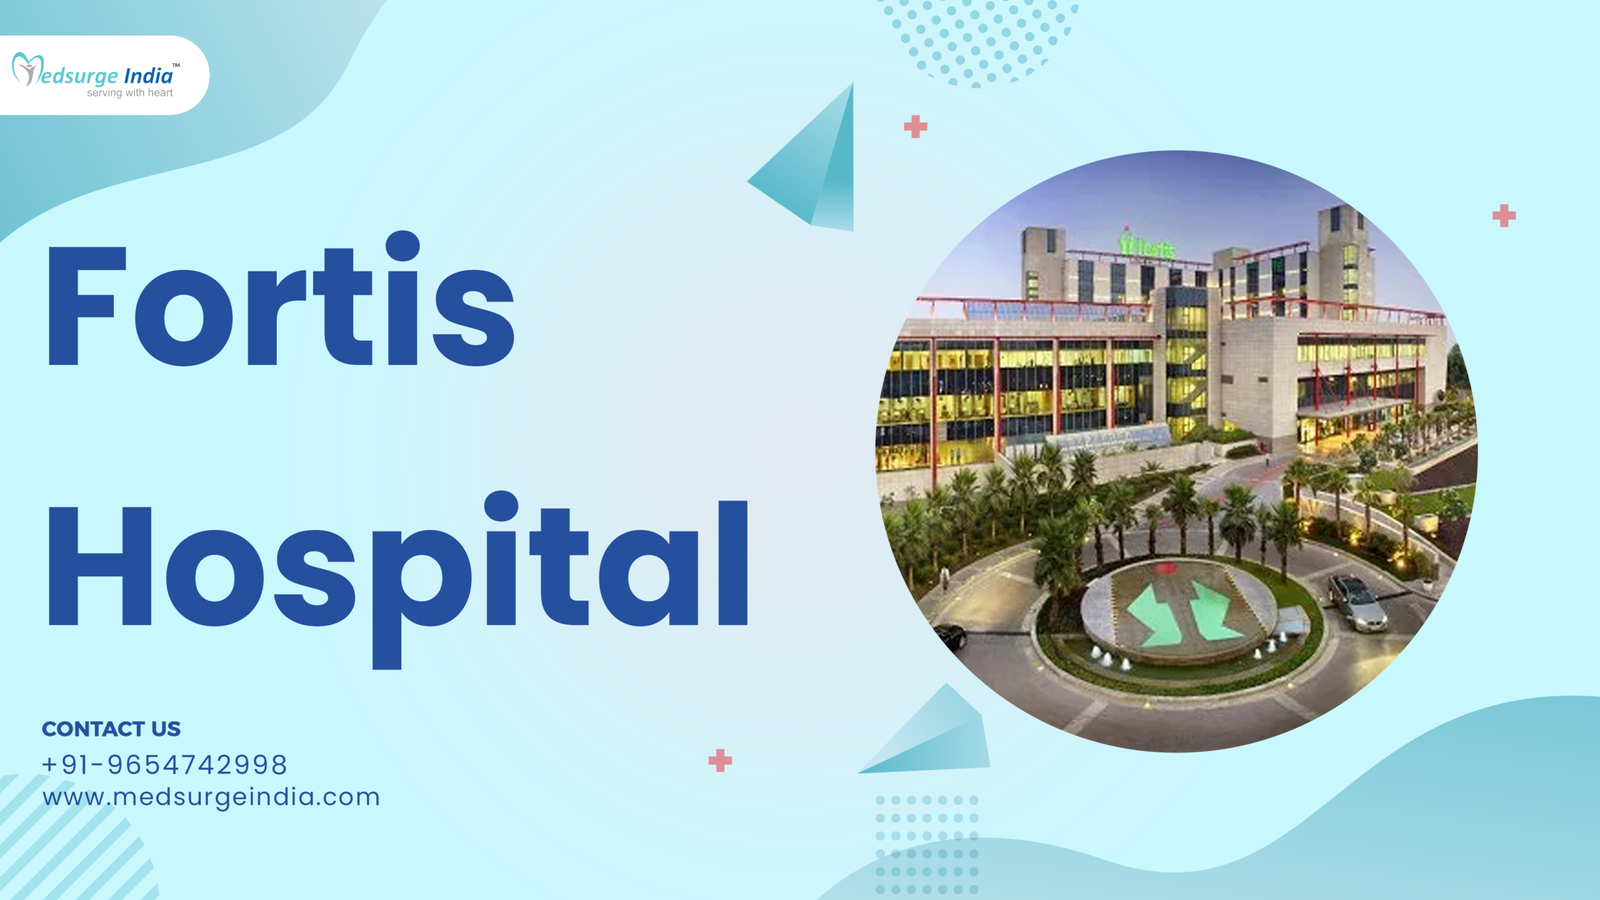 Contact Fortis Hospital, Gurgaon